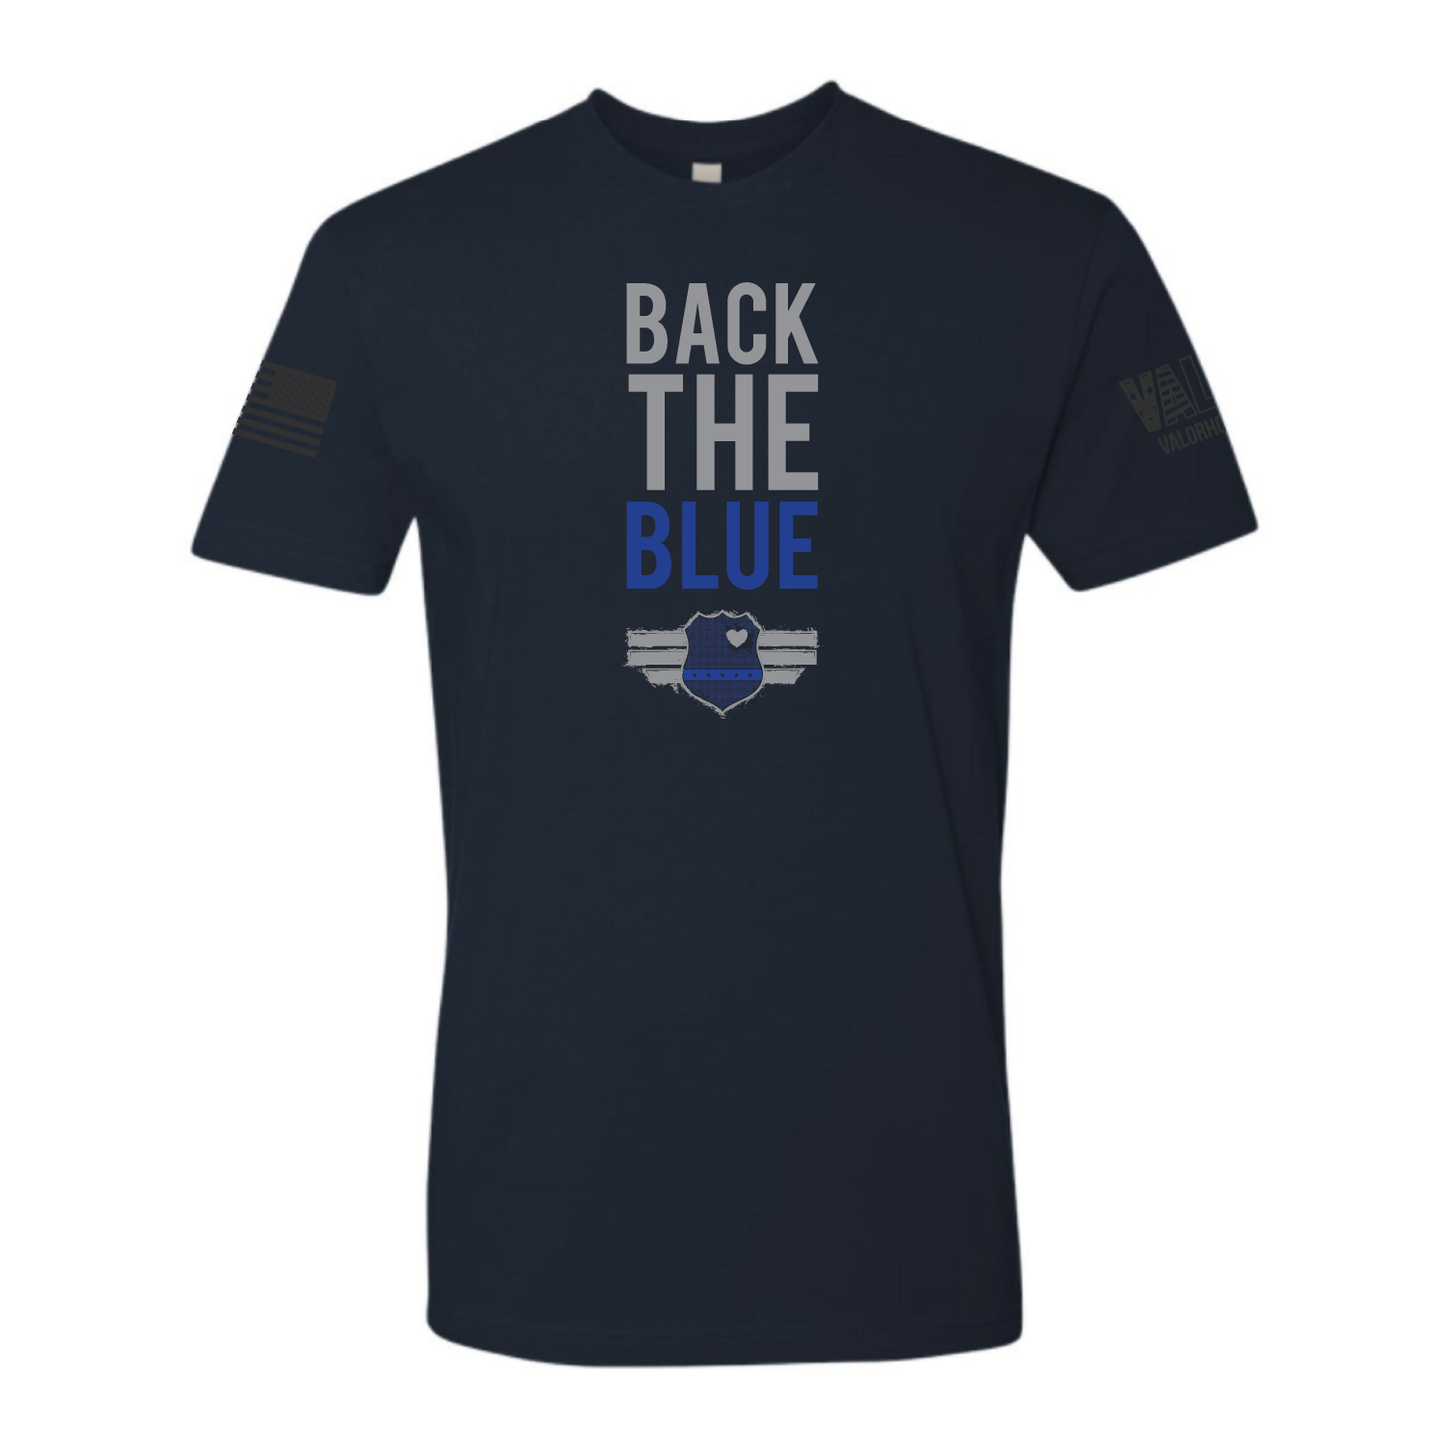 Gentlemen's "Back the Blue" Shirt